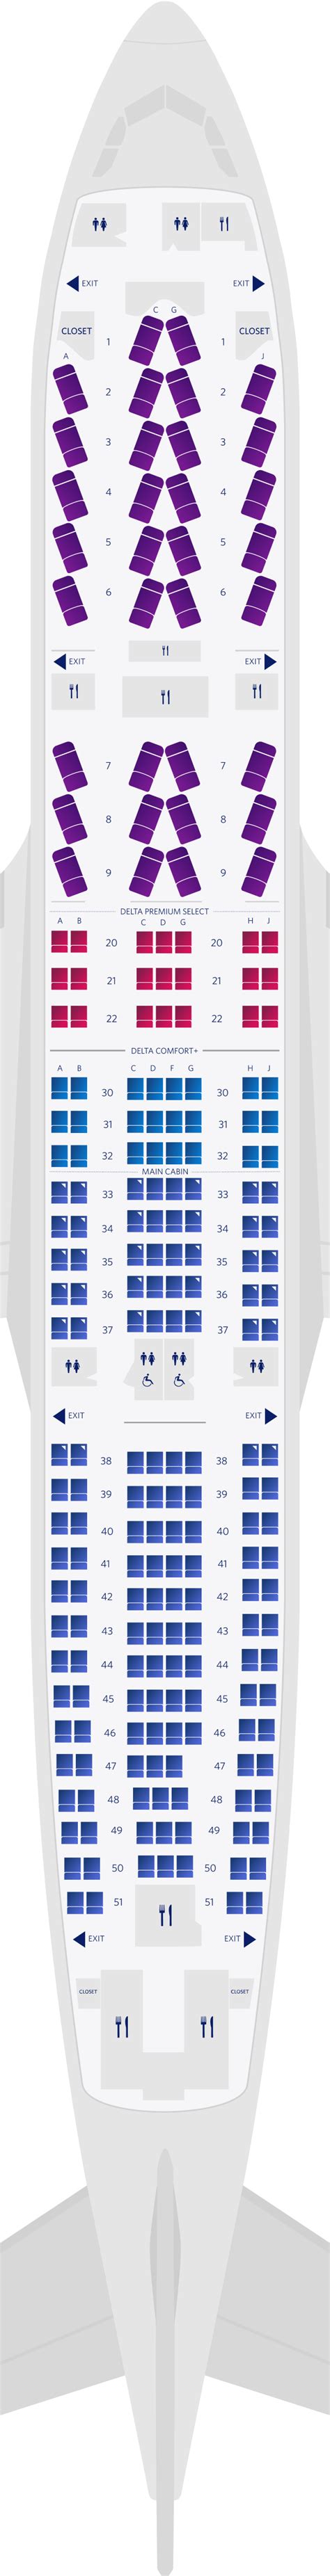 Delta Airbus A Seat Plan Elcho Table